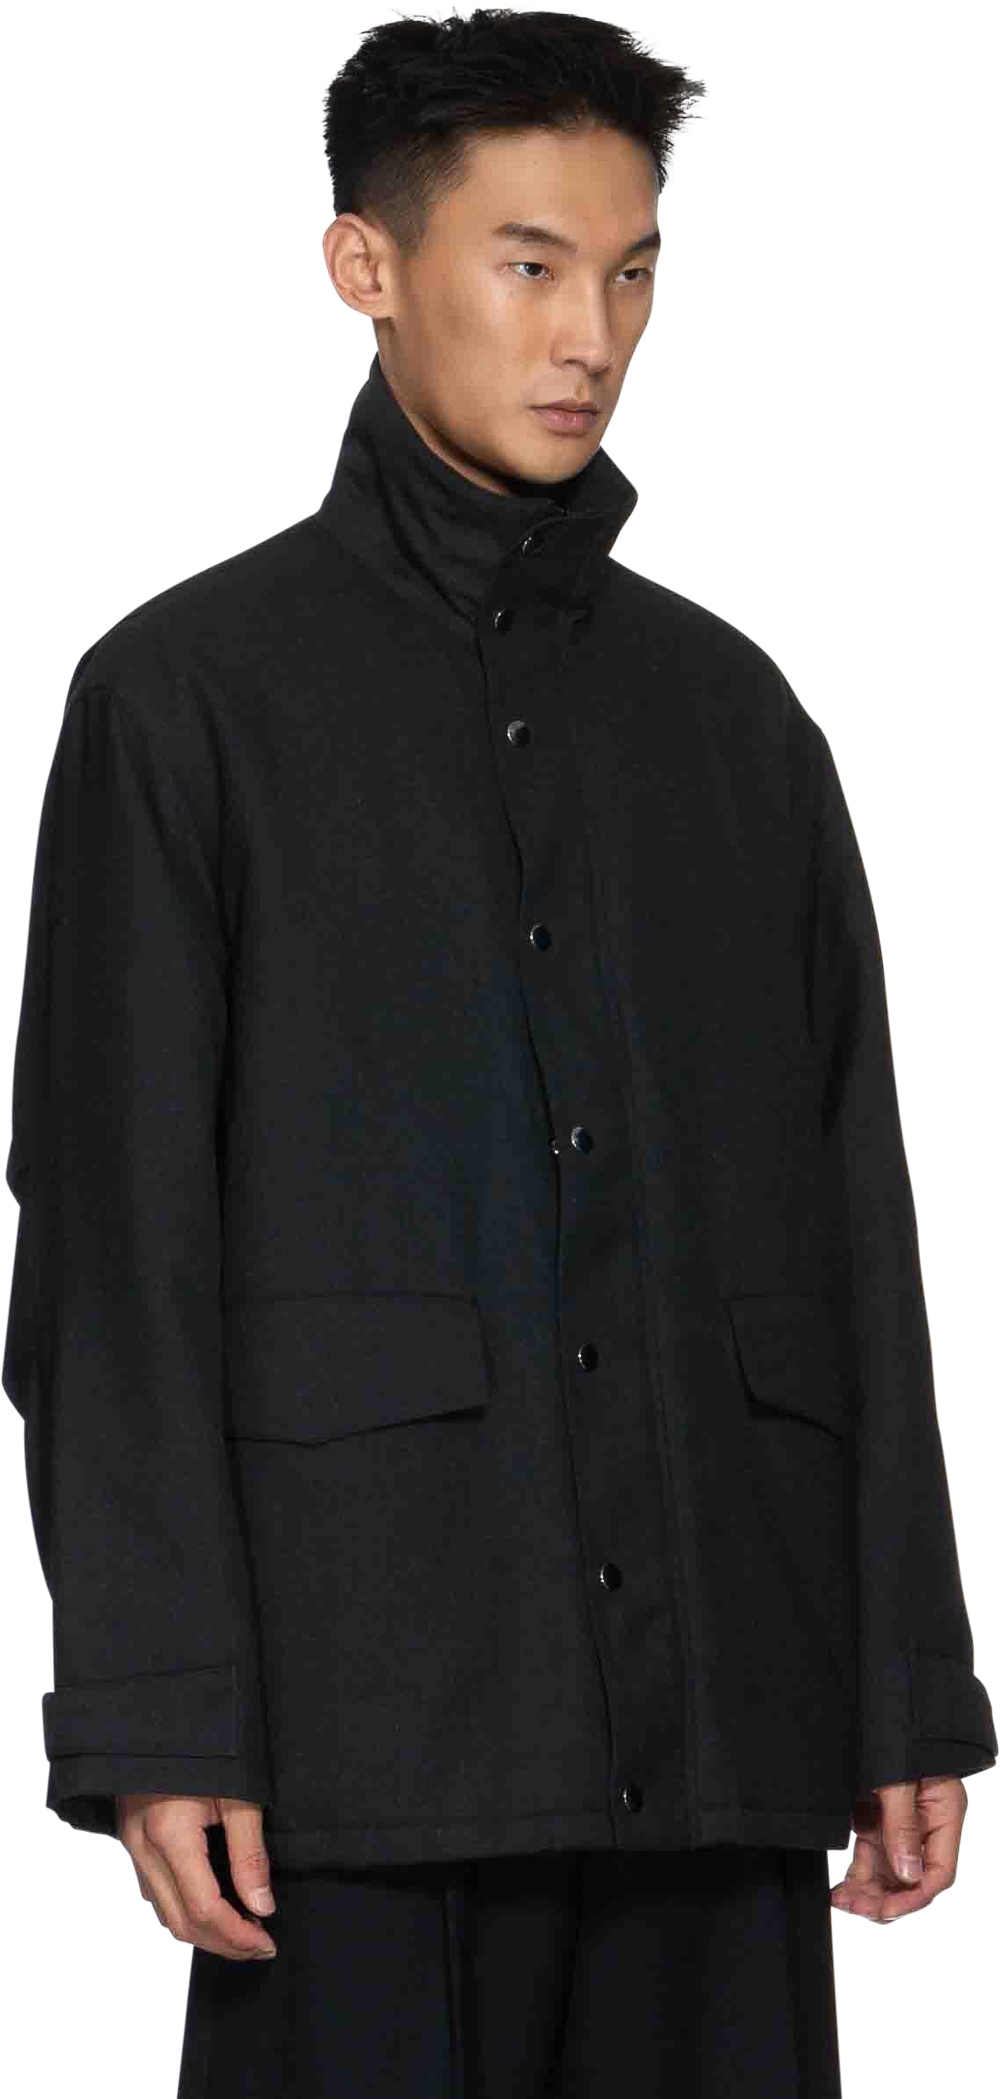 Coat : CHARCOAL BLACK